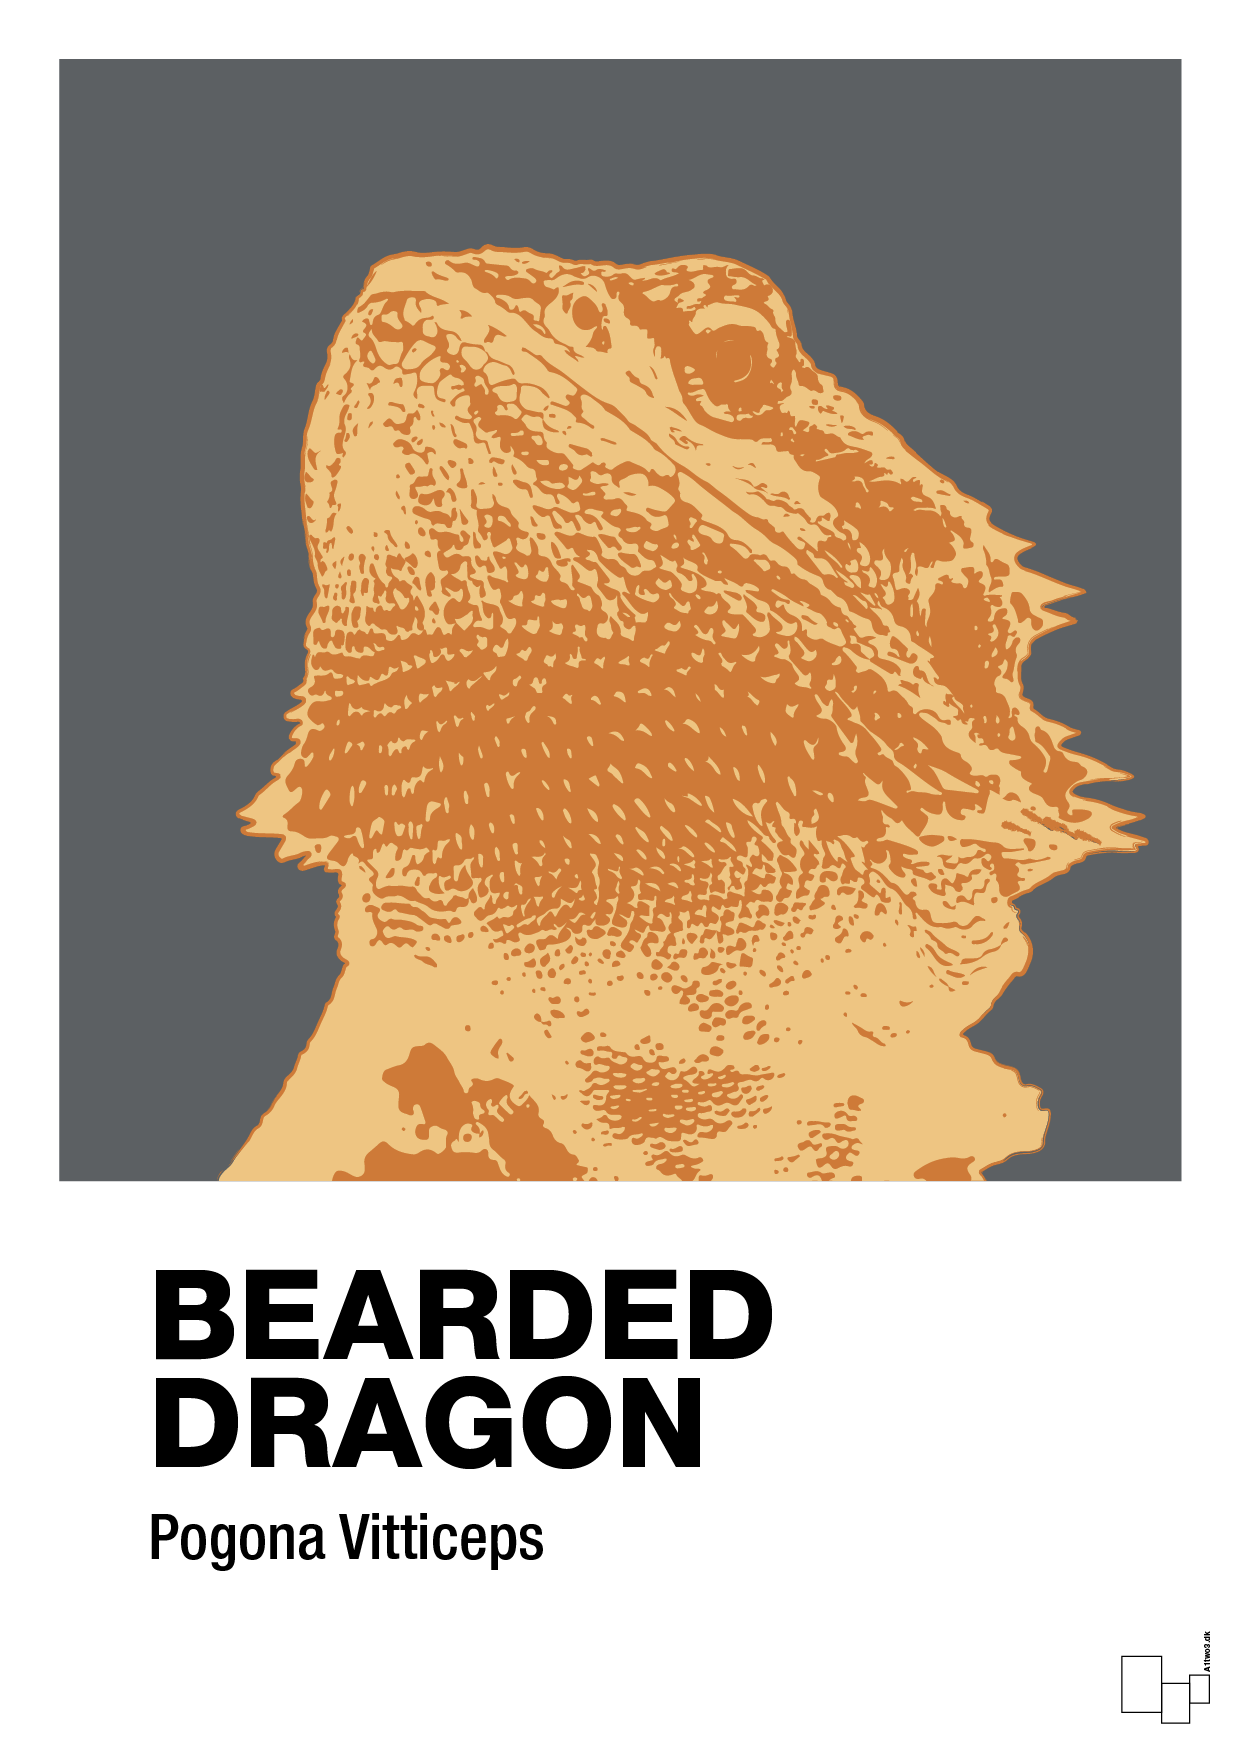 bearded dragon - Plakat med Videnskab i Graphic Charcoal